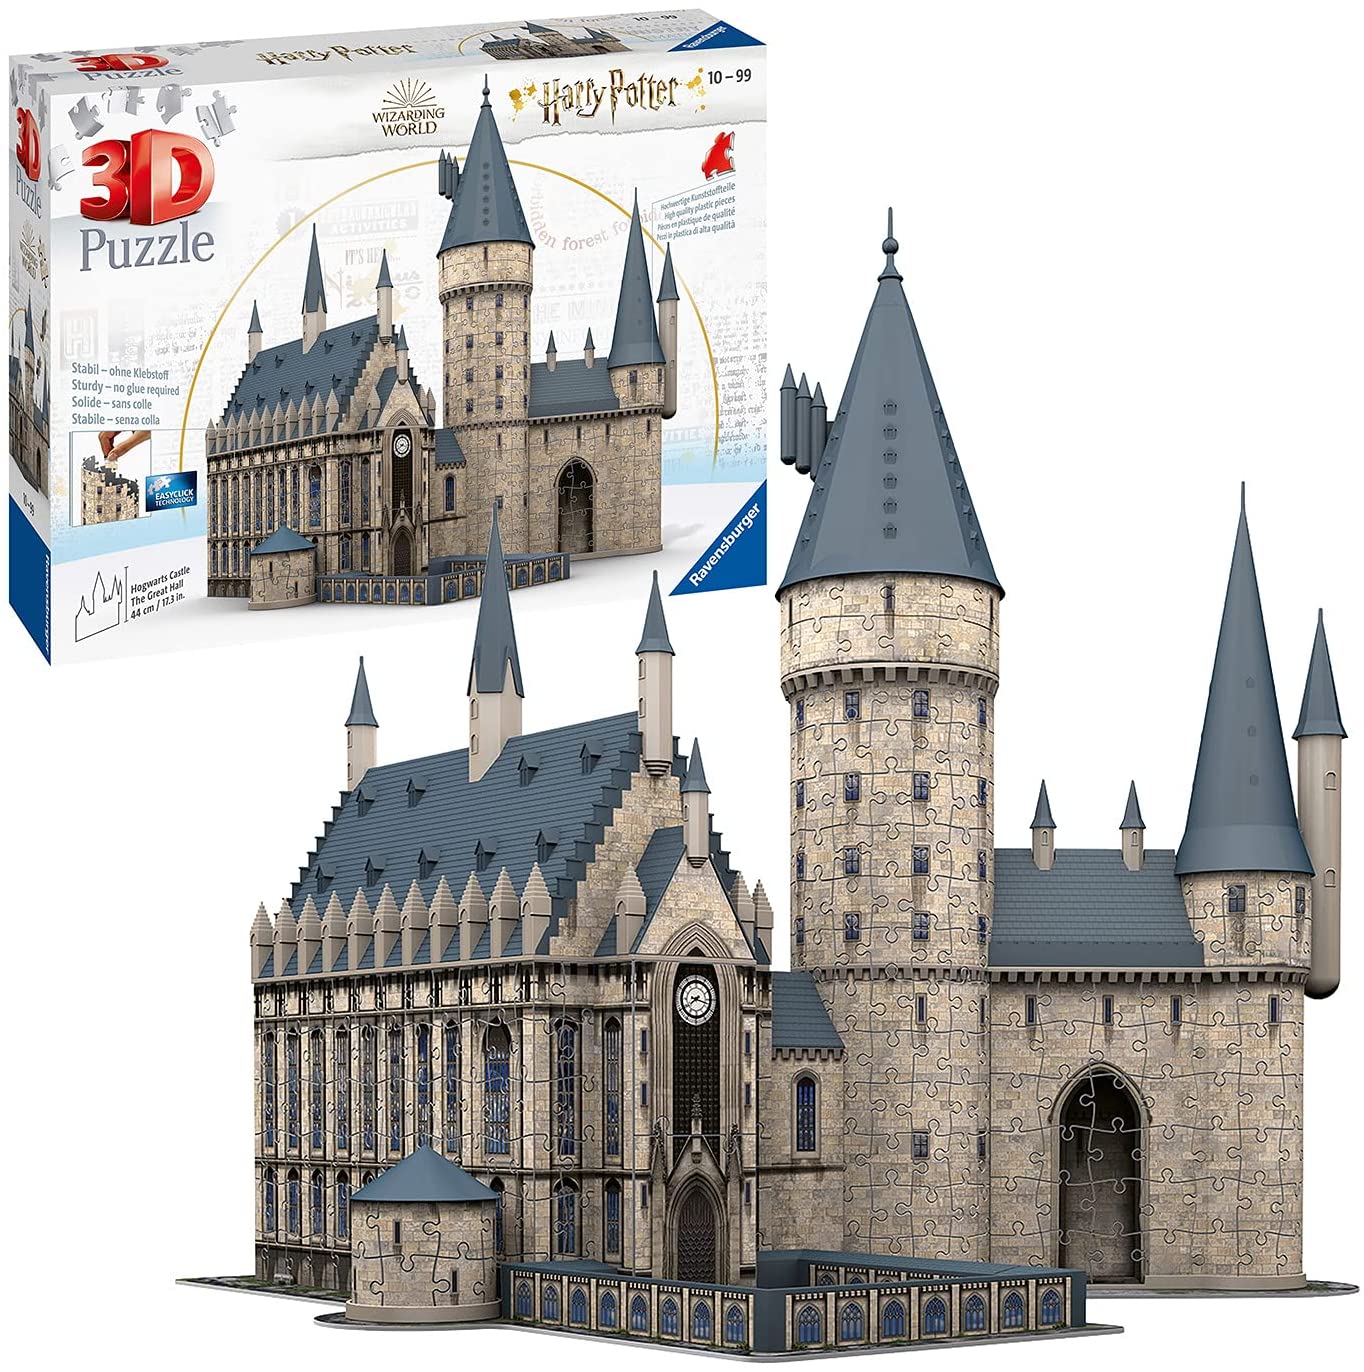 Ravensburger - 3D Puzzle Harry Potter, Great Hall of Hogwarts Castle